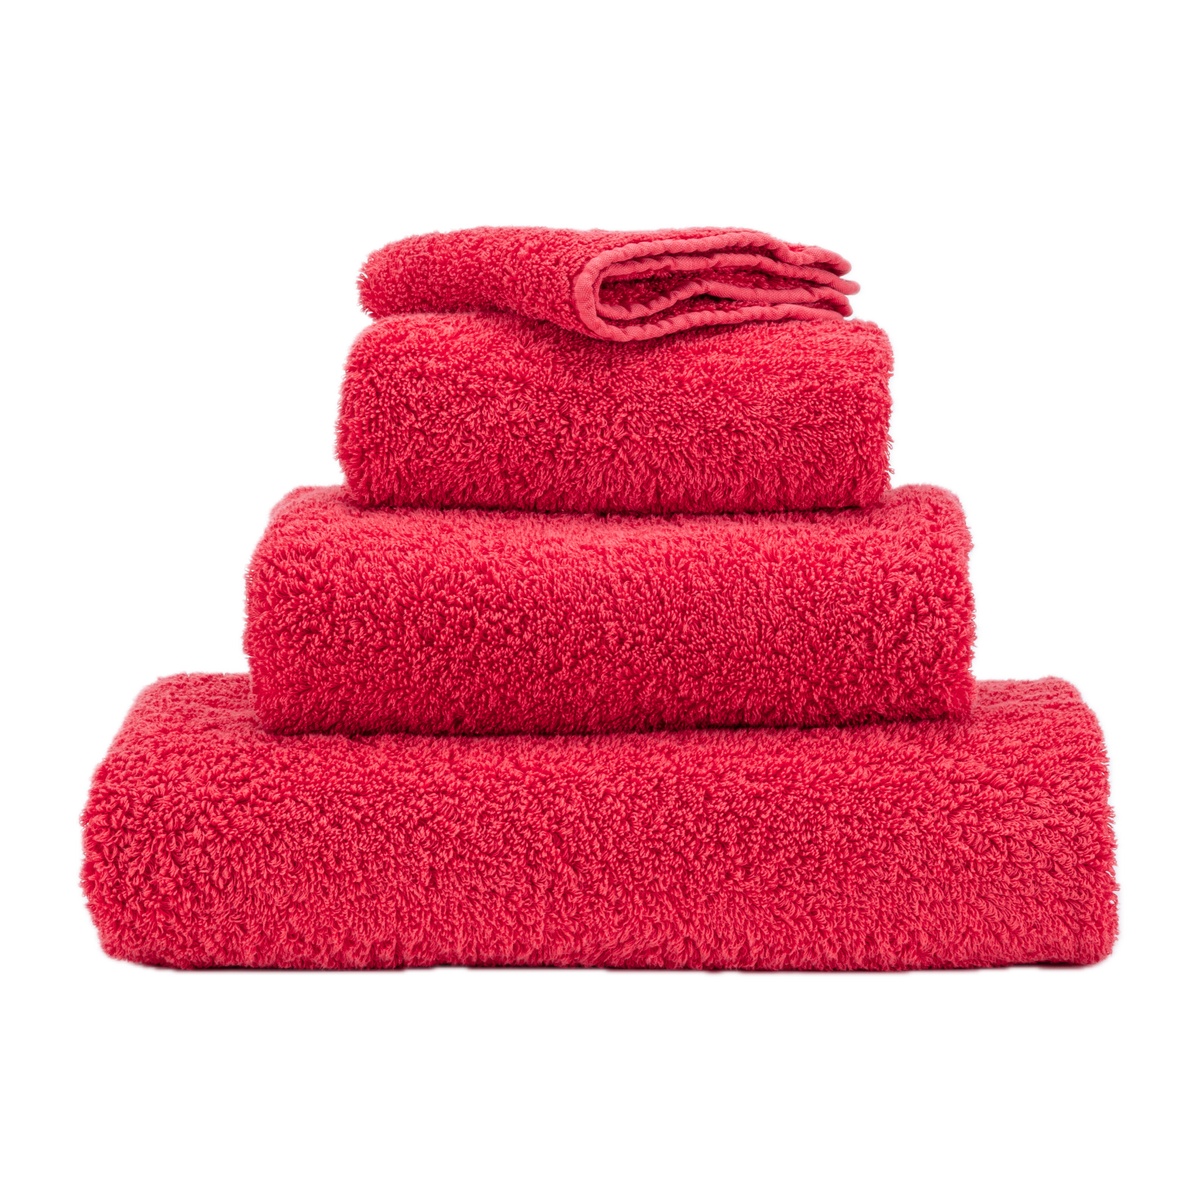 Stack of Abyss Super Pile Bath Towels in Viva Magenta Color